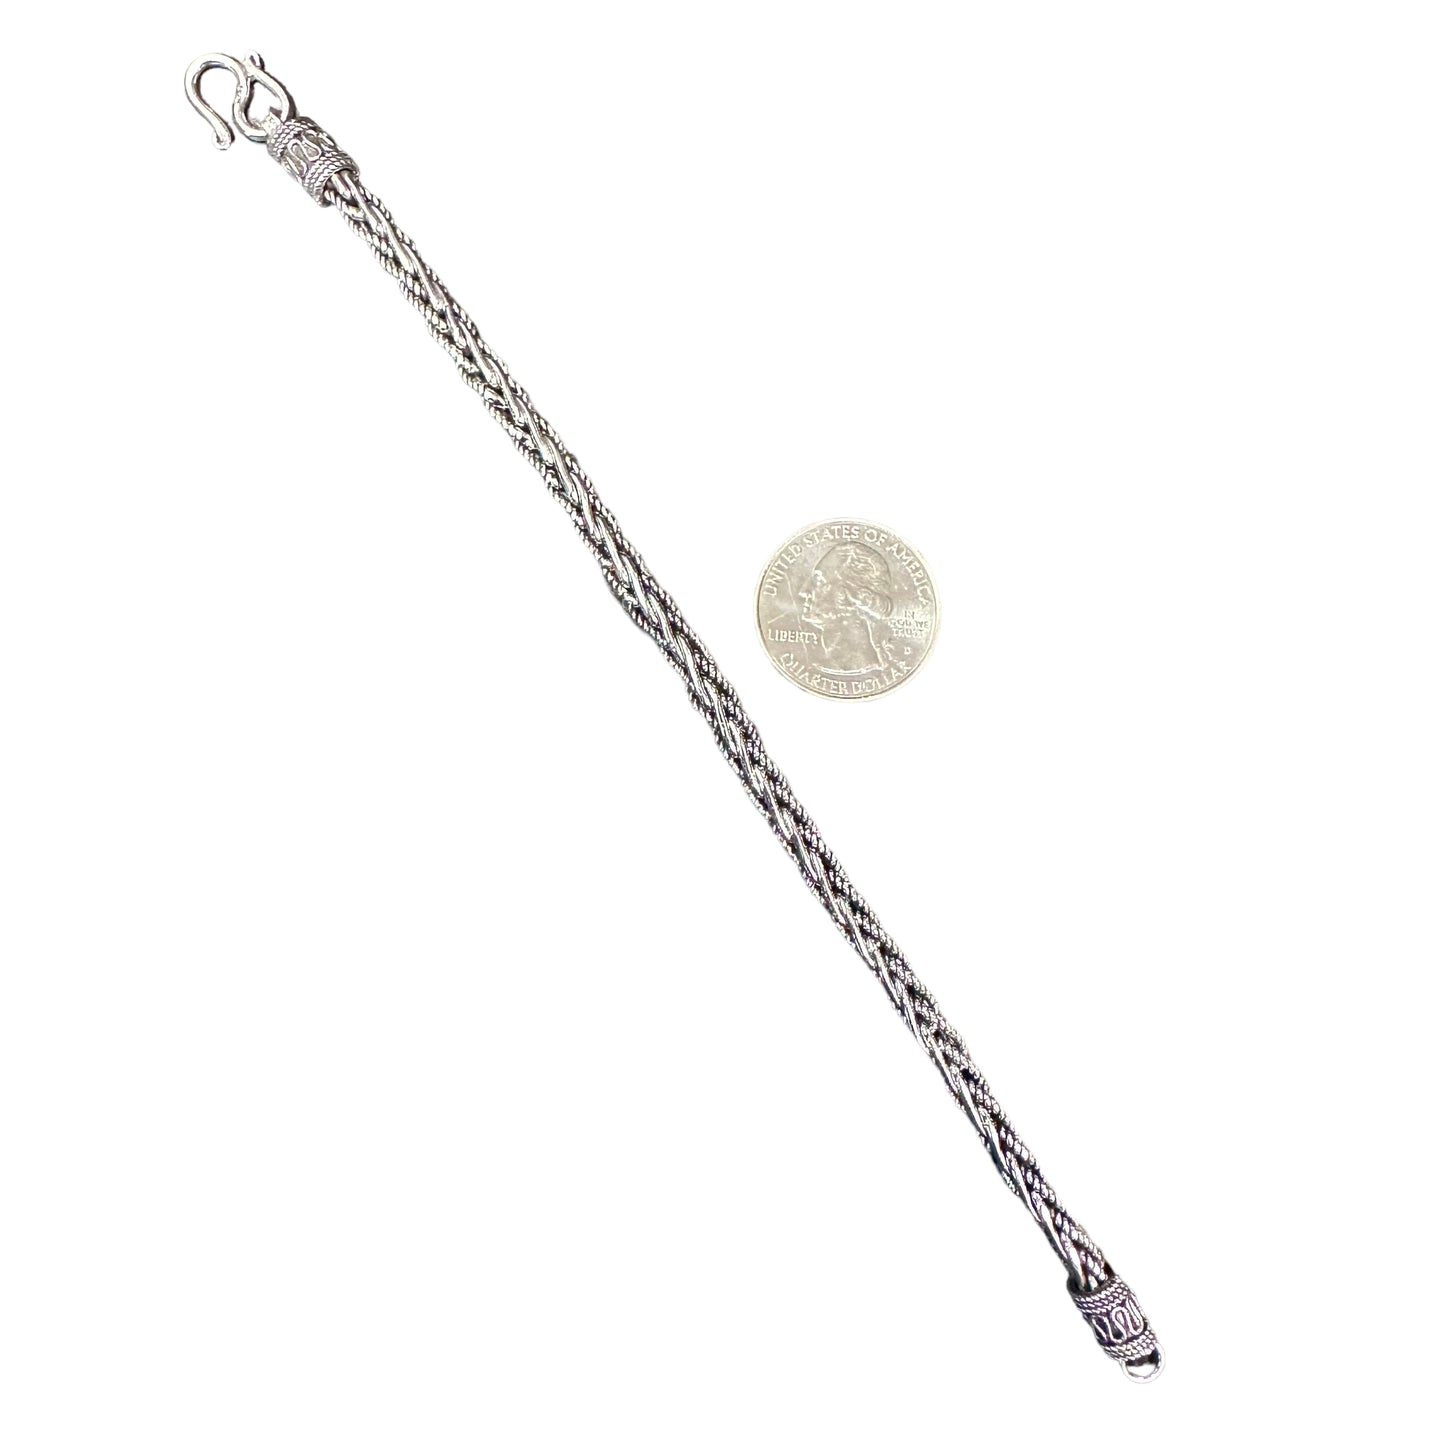 Handmade Braided Foxtail 5mm Sterling Silver Bracelet Chain